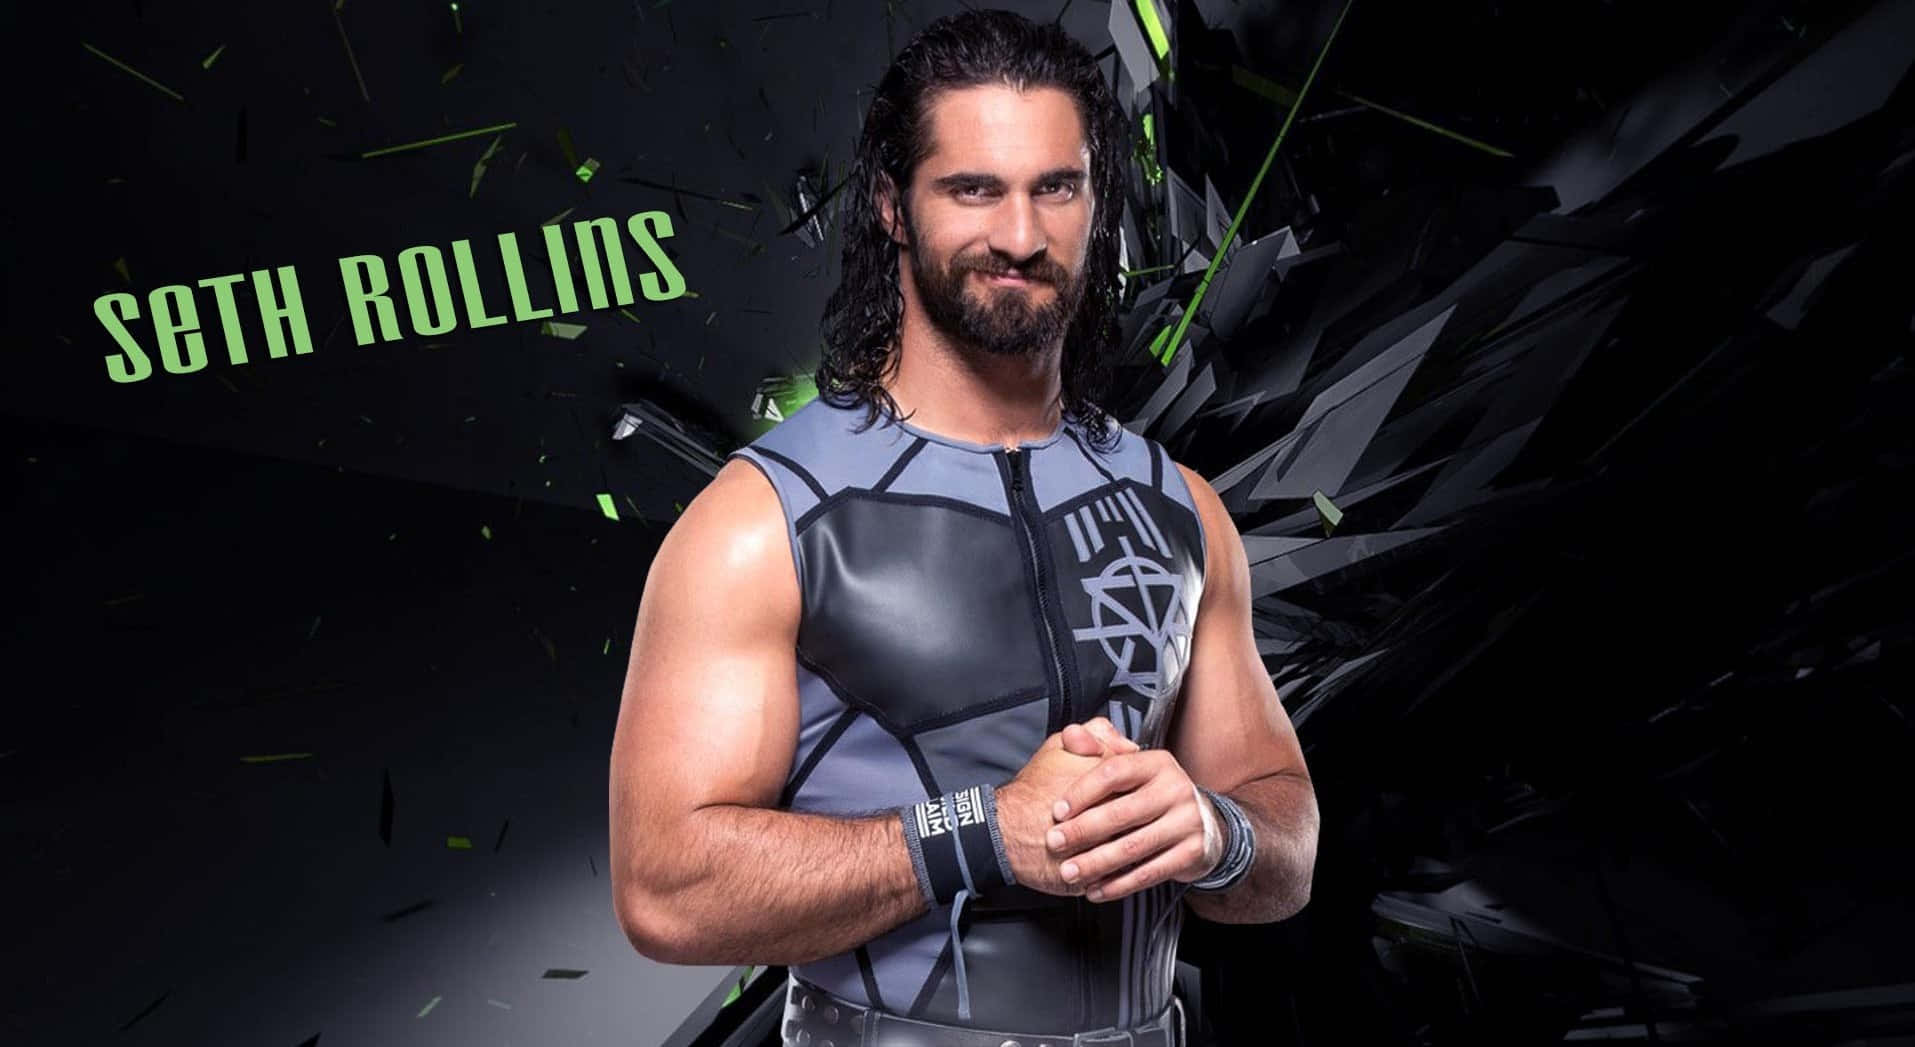 Seth Rollins Wrestling Attire Background